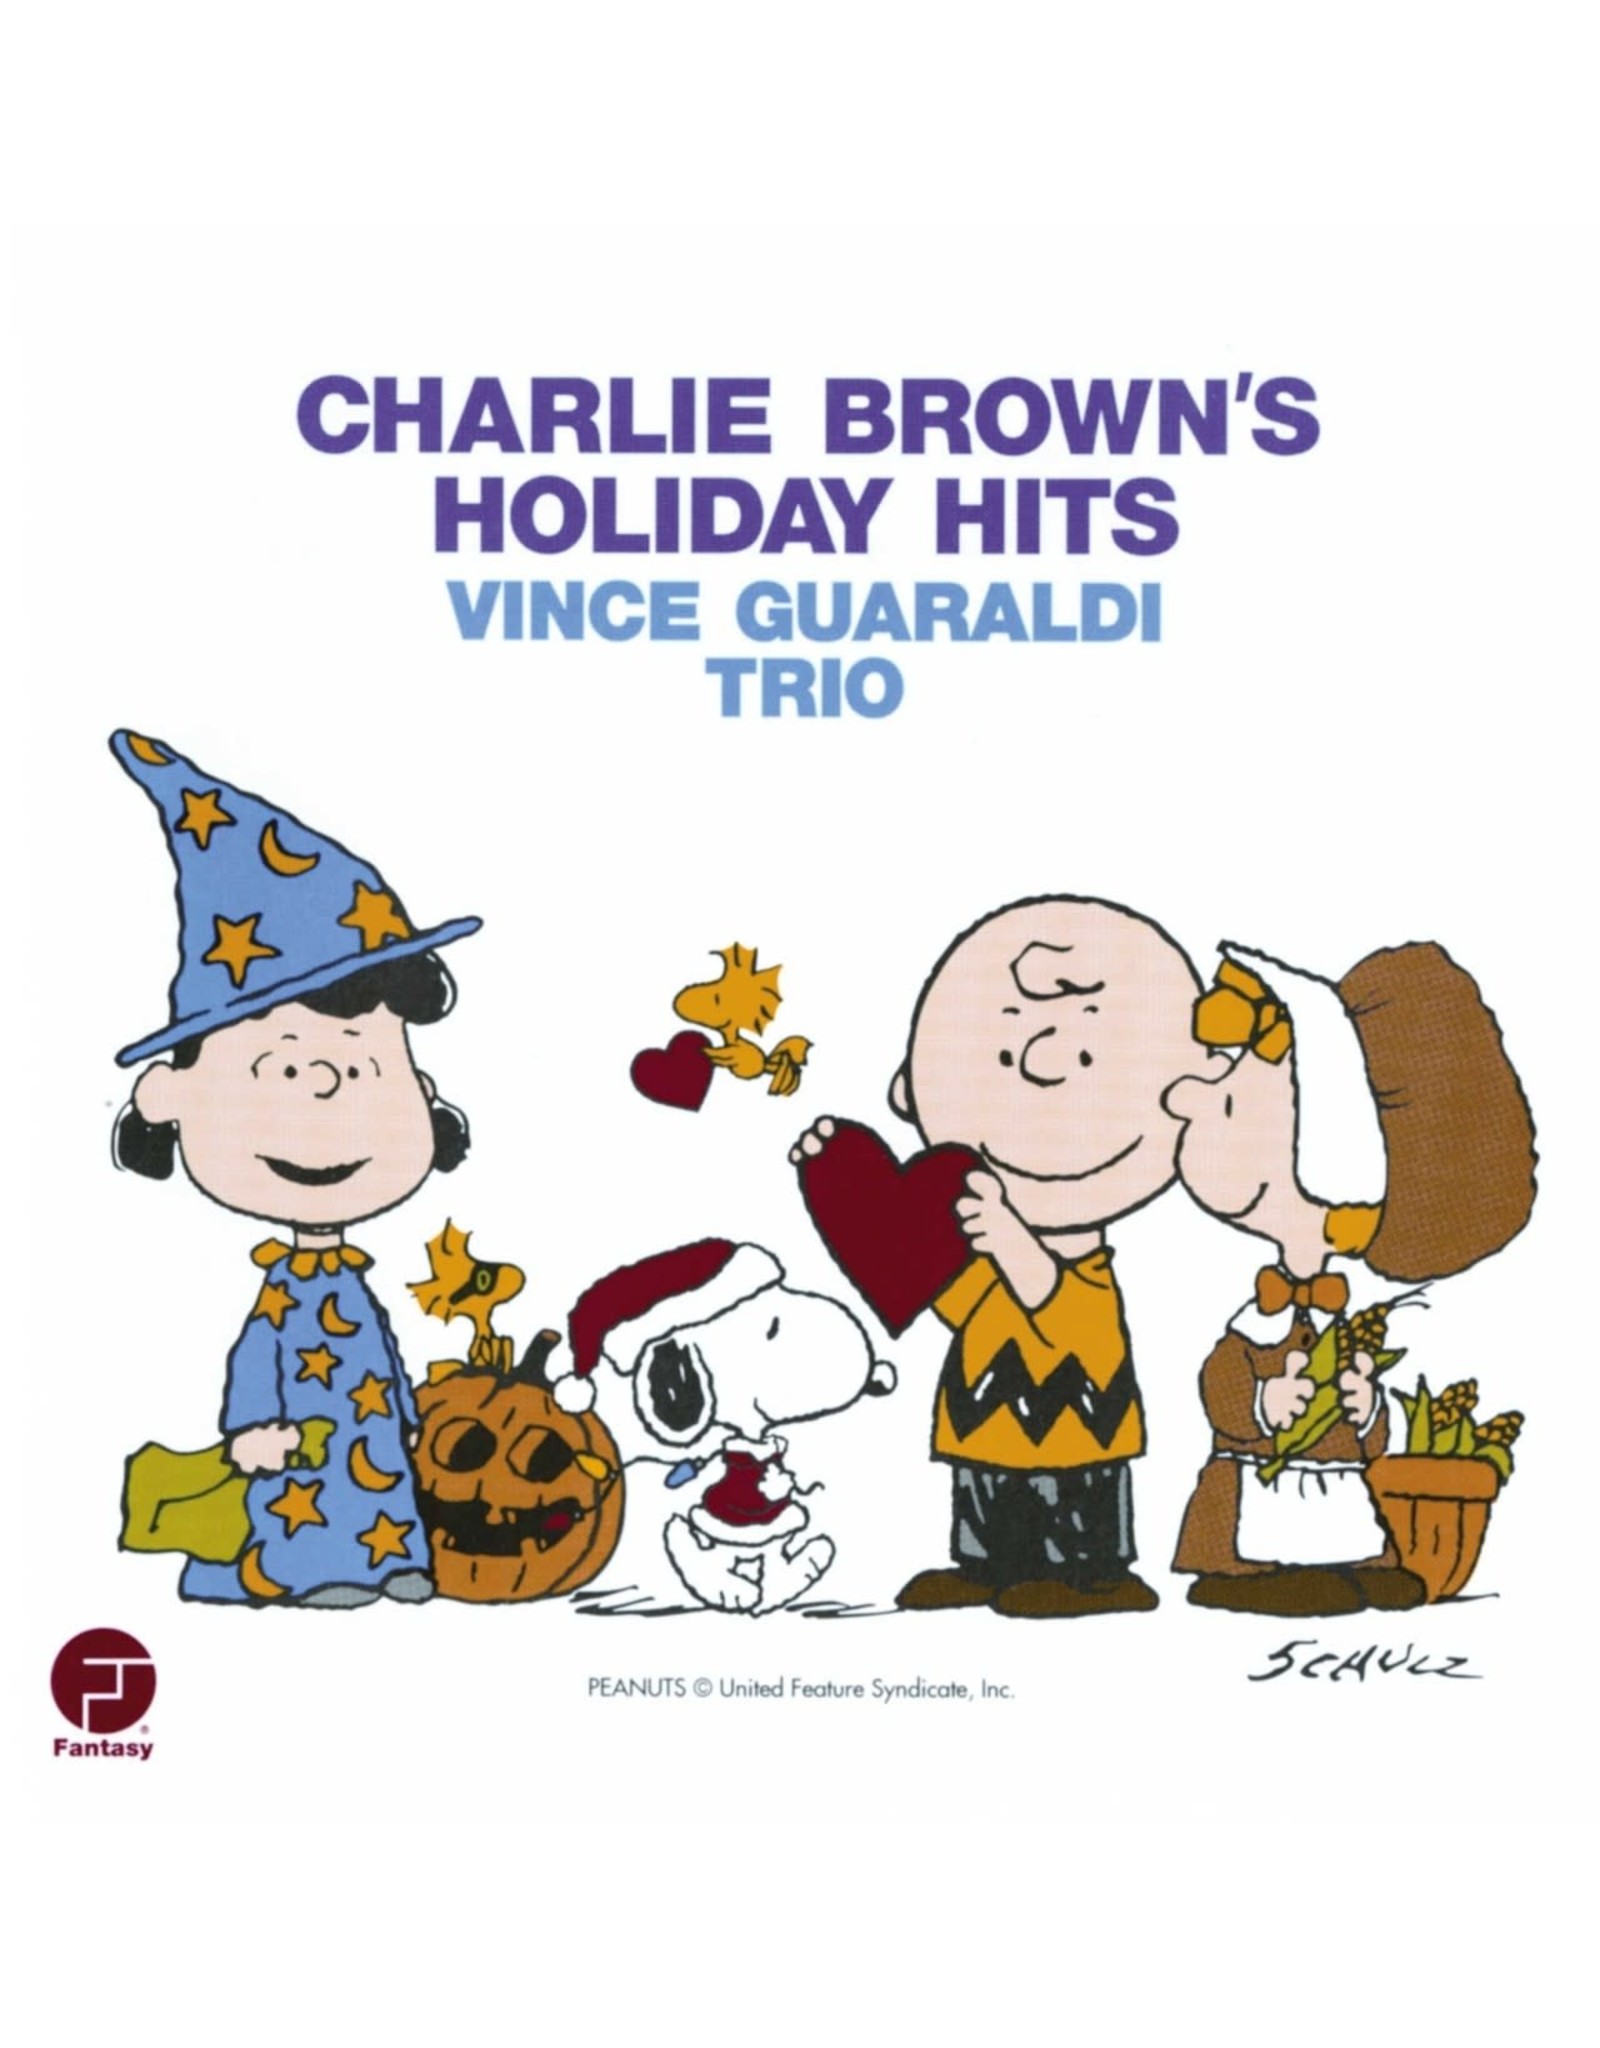 Vince Guaraldi Trio - Charlie Brown's Holiday Hits